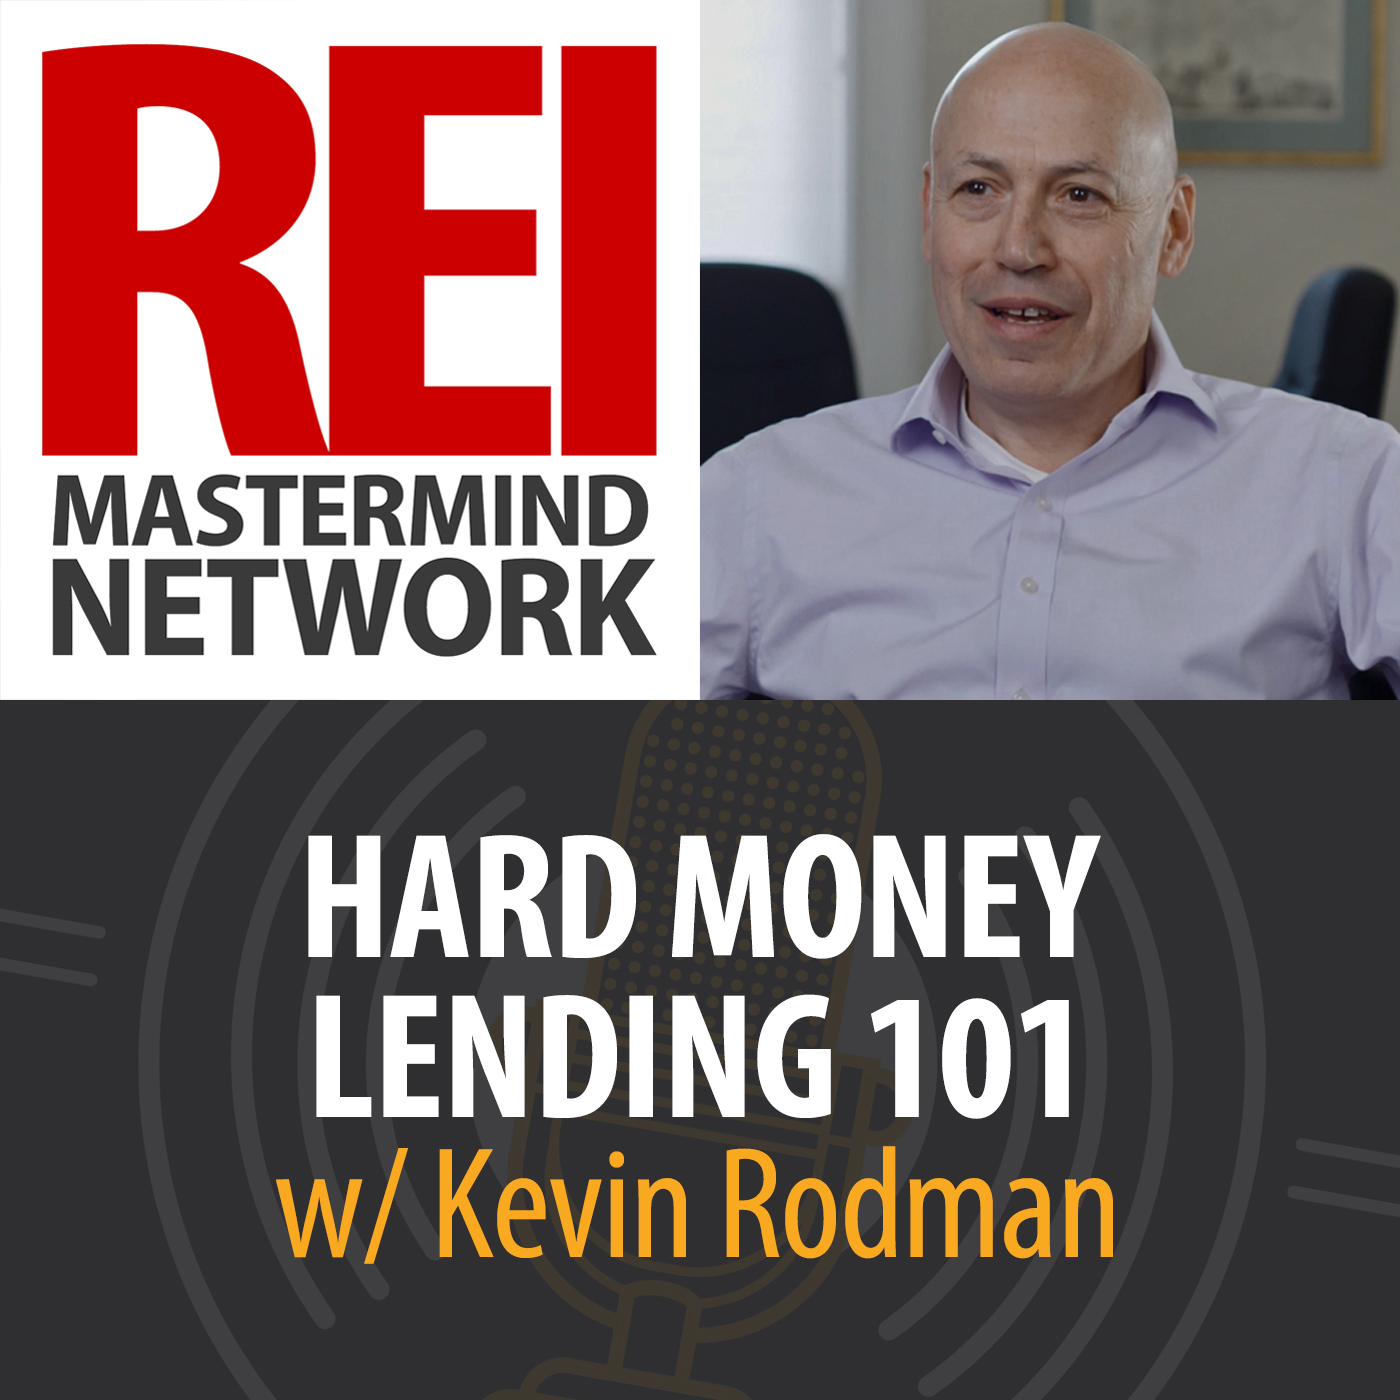 Hard Money Lending 101 with Kevin Rodman #237 Image